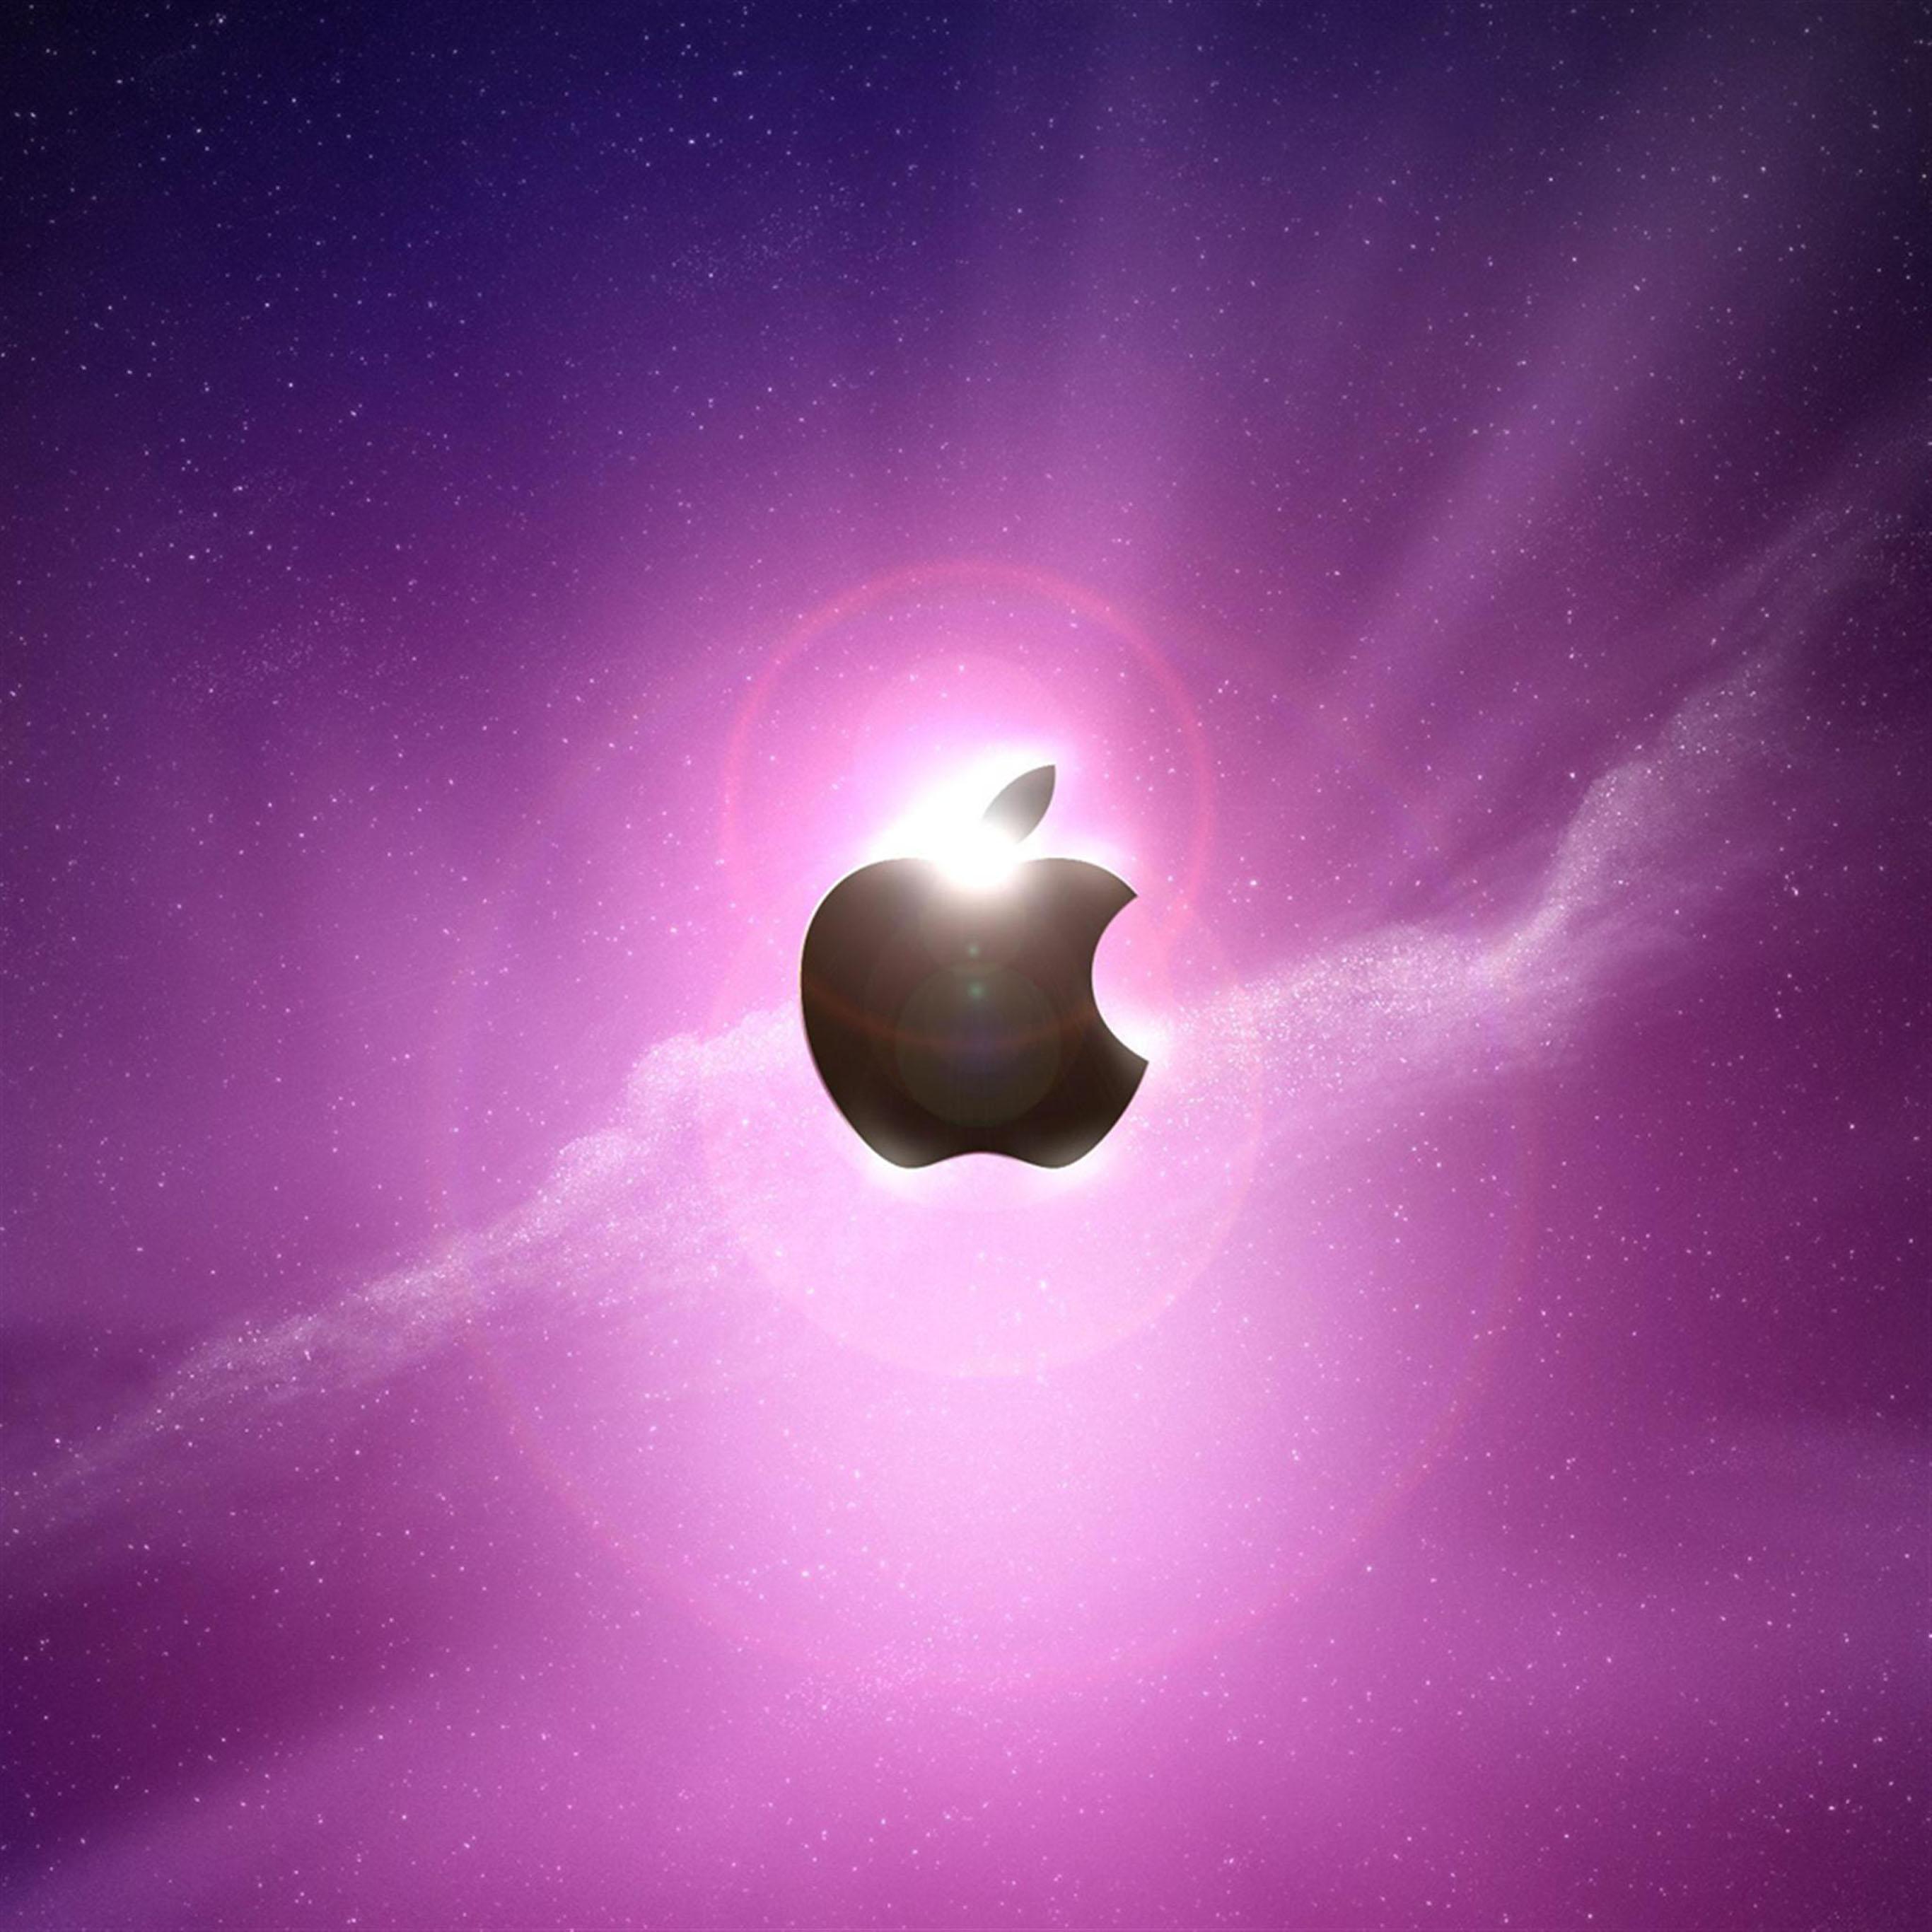 Apple iPad Background Free Download